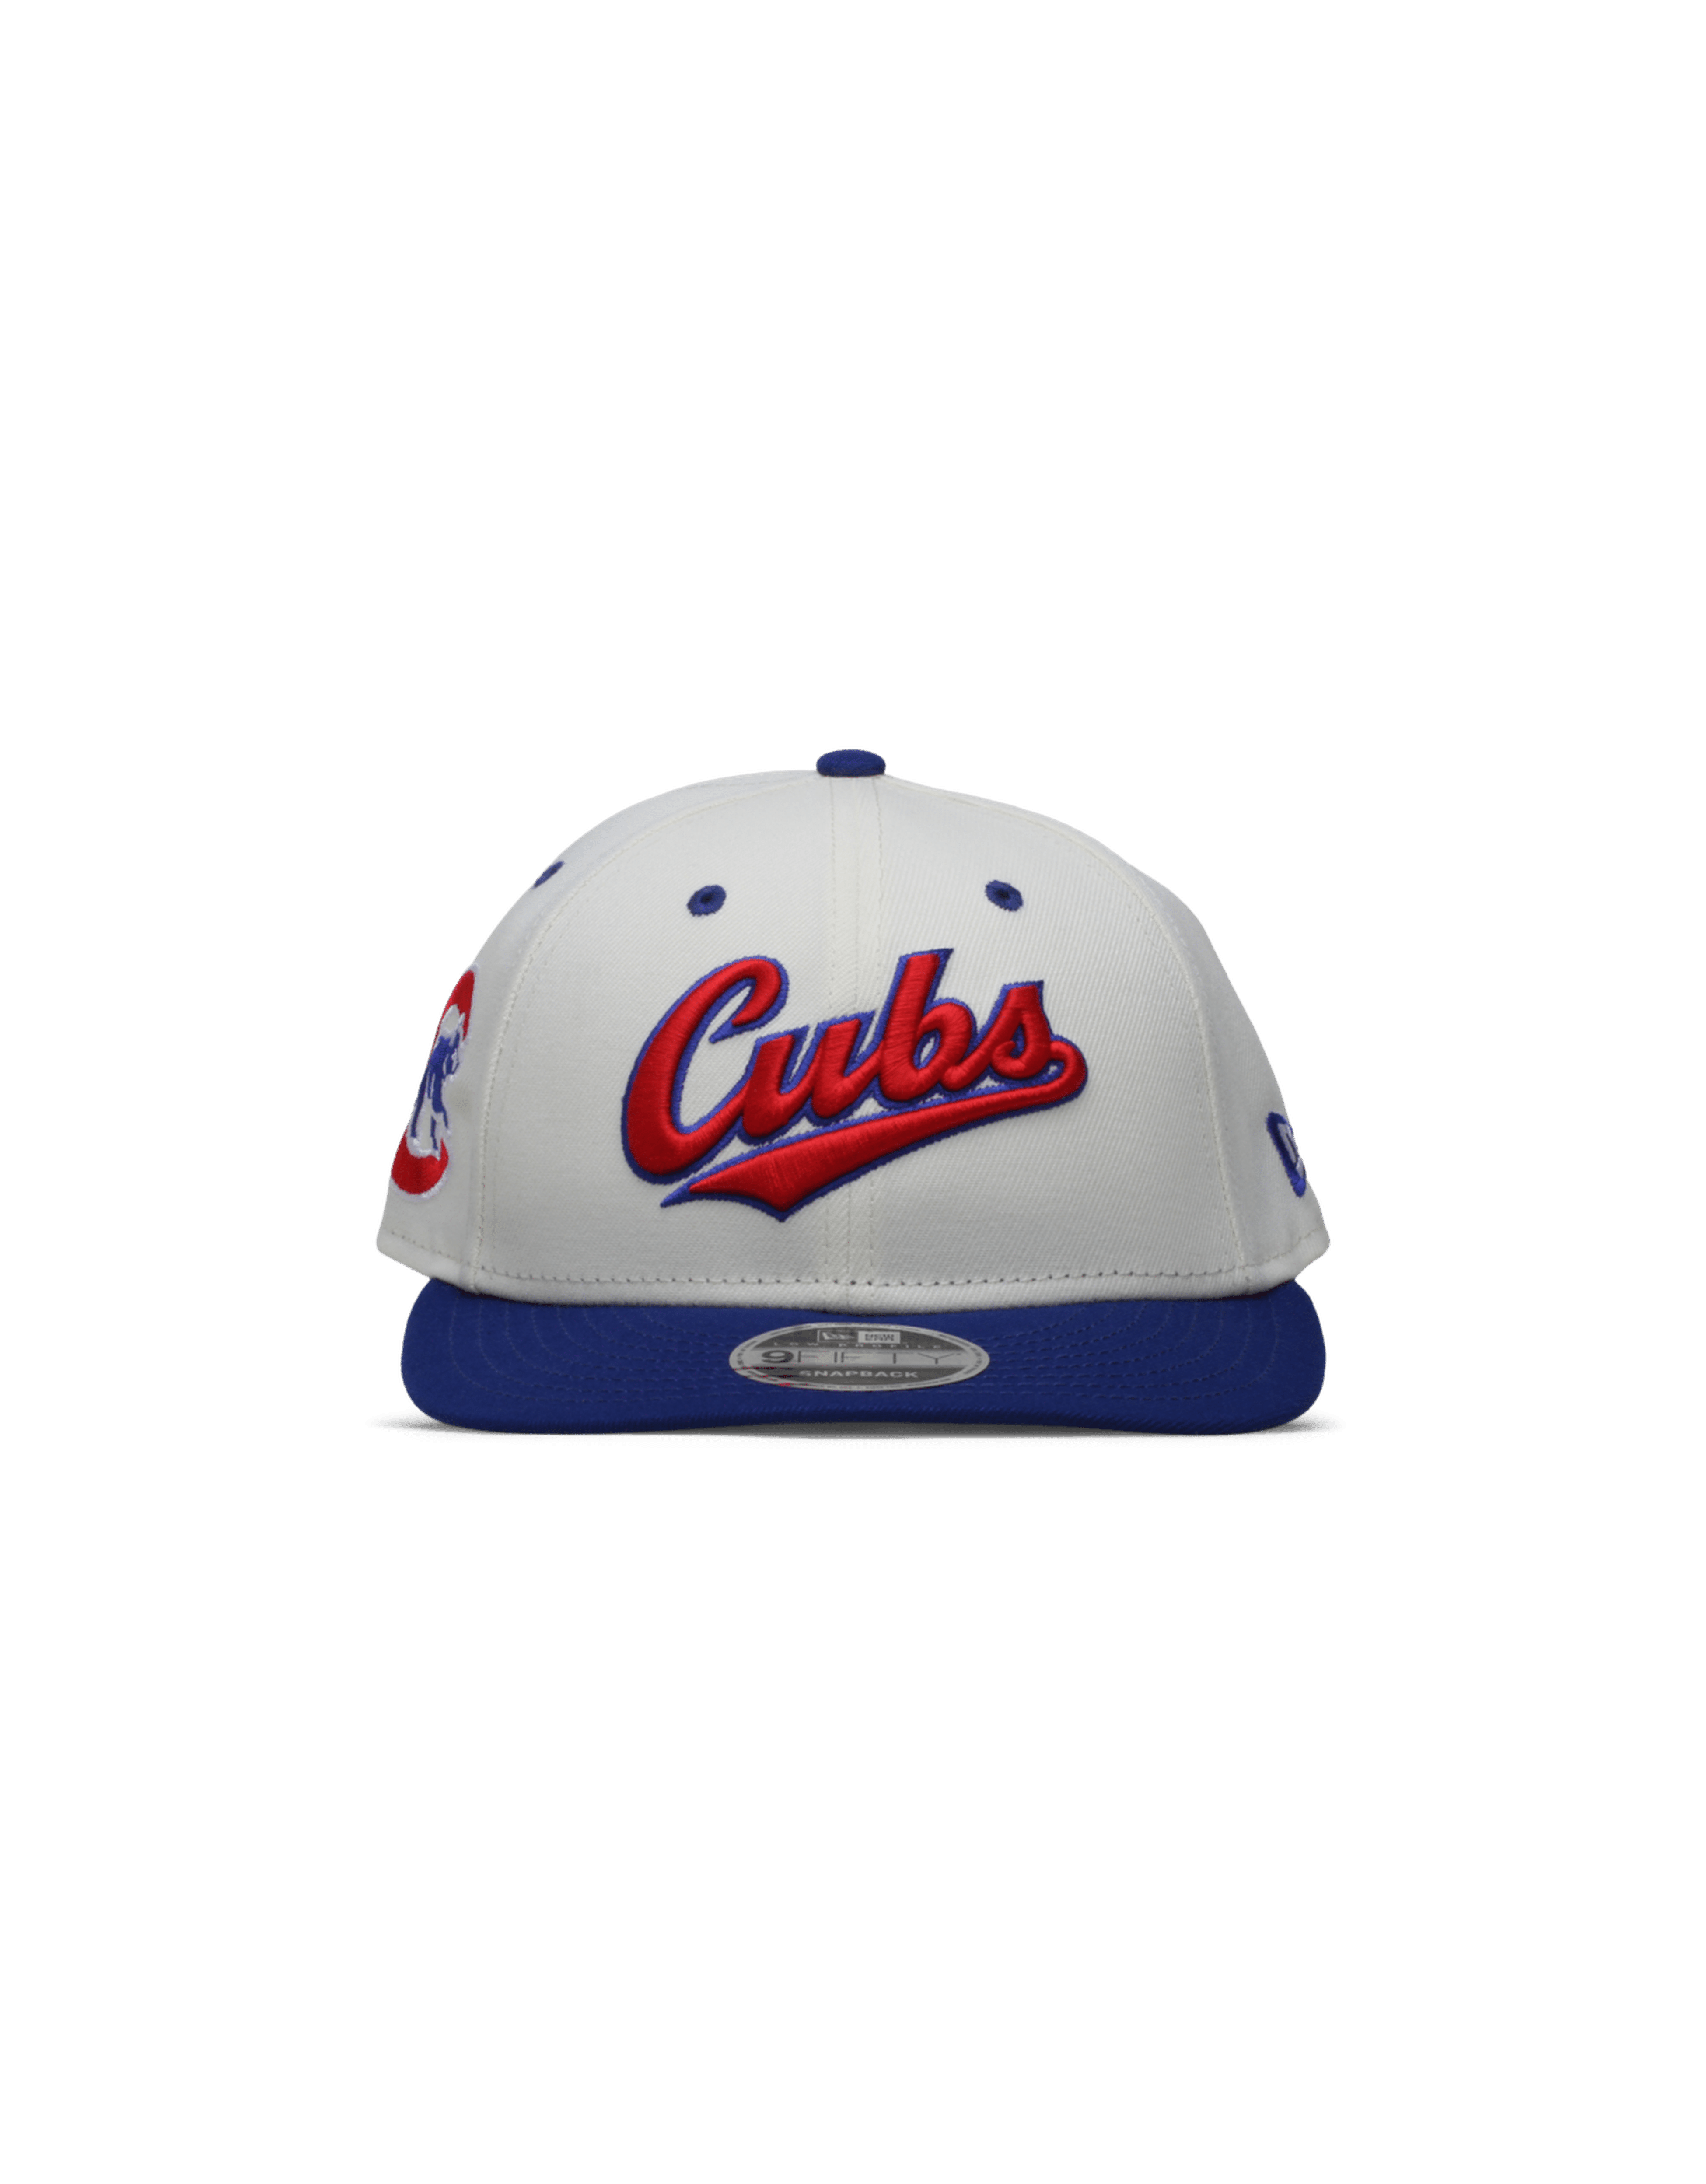 Chicago Cubs x FELT 9FIFTY Snapback Cap